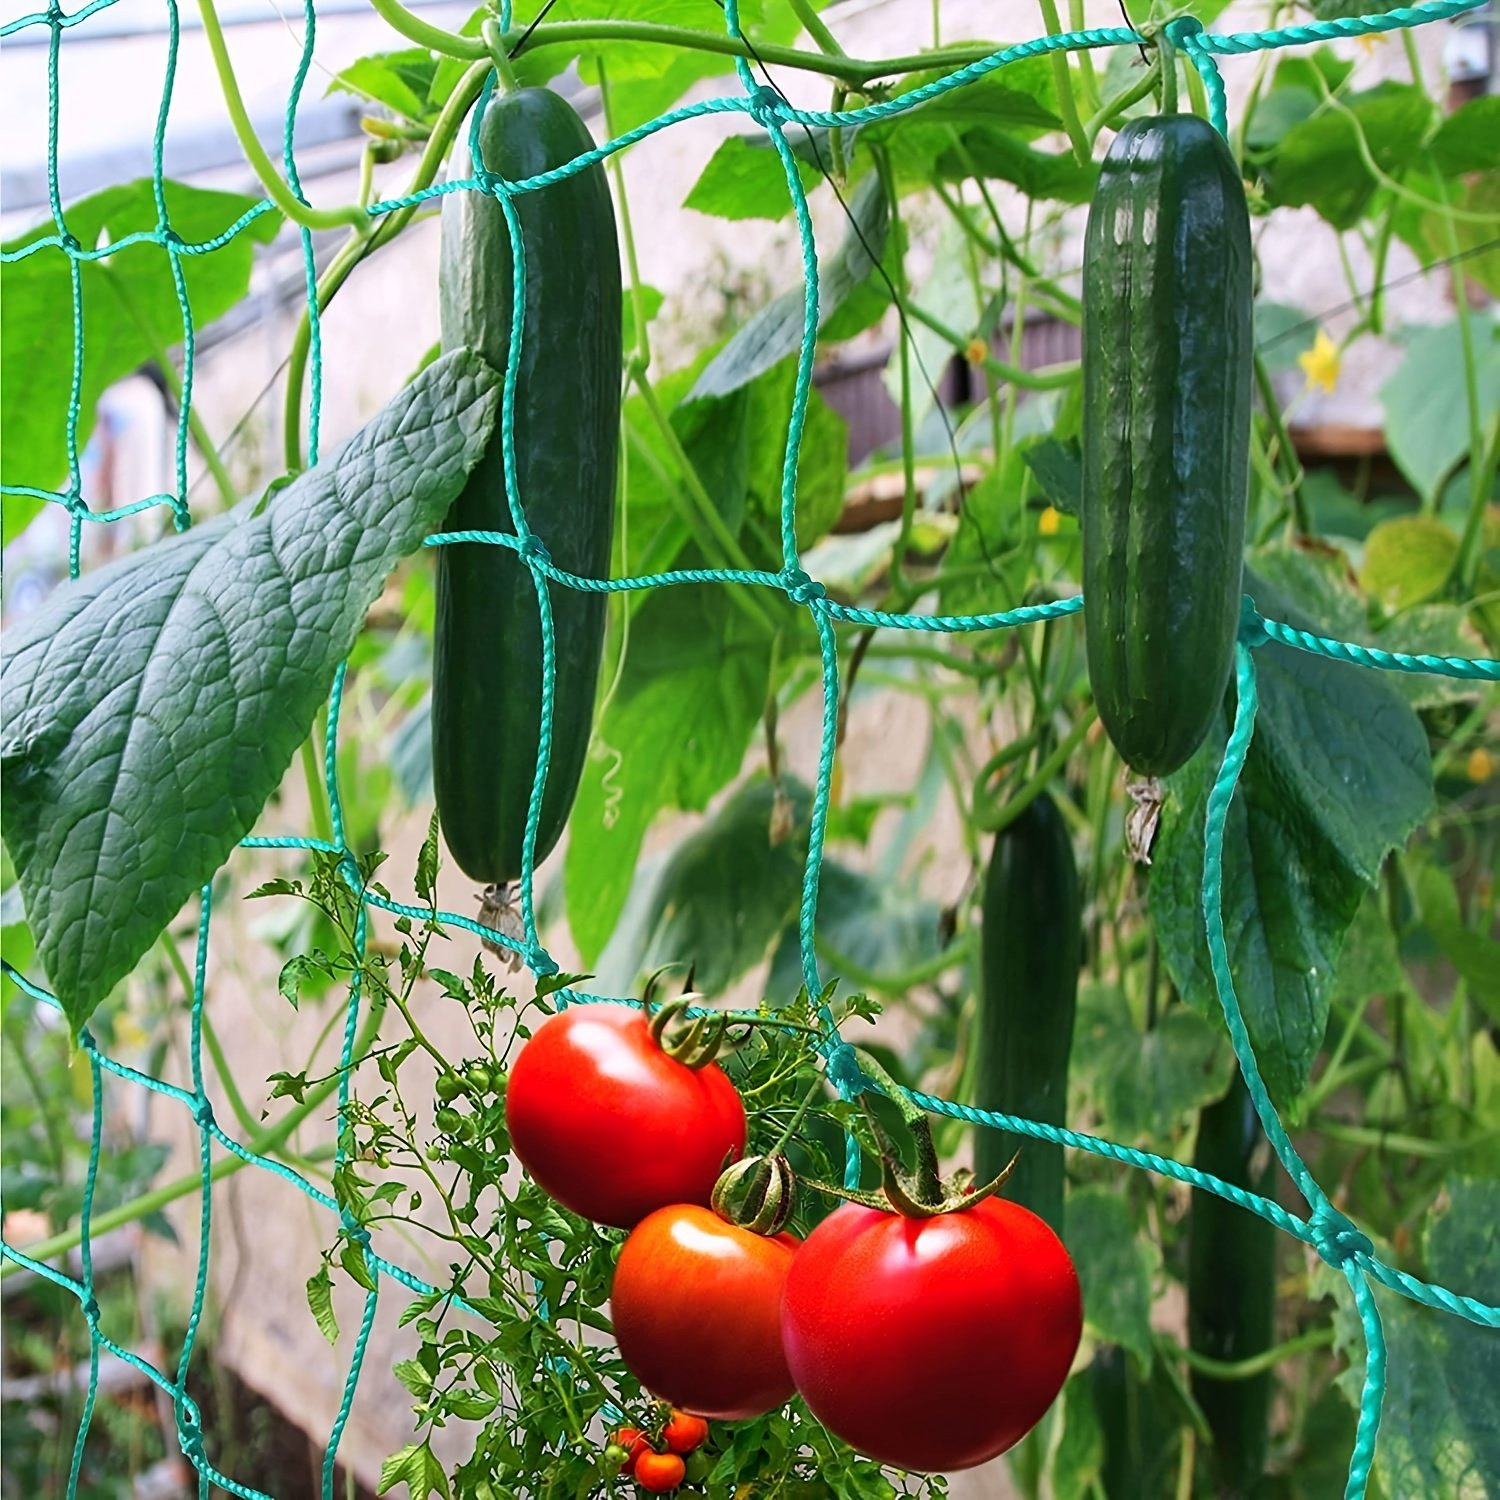 

1pc Garden Trellis For Climbing Plants Outdoor, Trellis Netting For Cucumber, Tomato, Plant Trellis Net With 4x4 Inch Mesh As Vegetable Trellis For Grape, Bean, Growing Pea